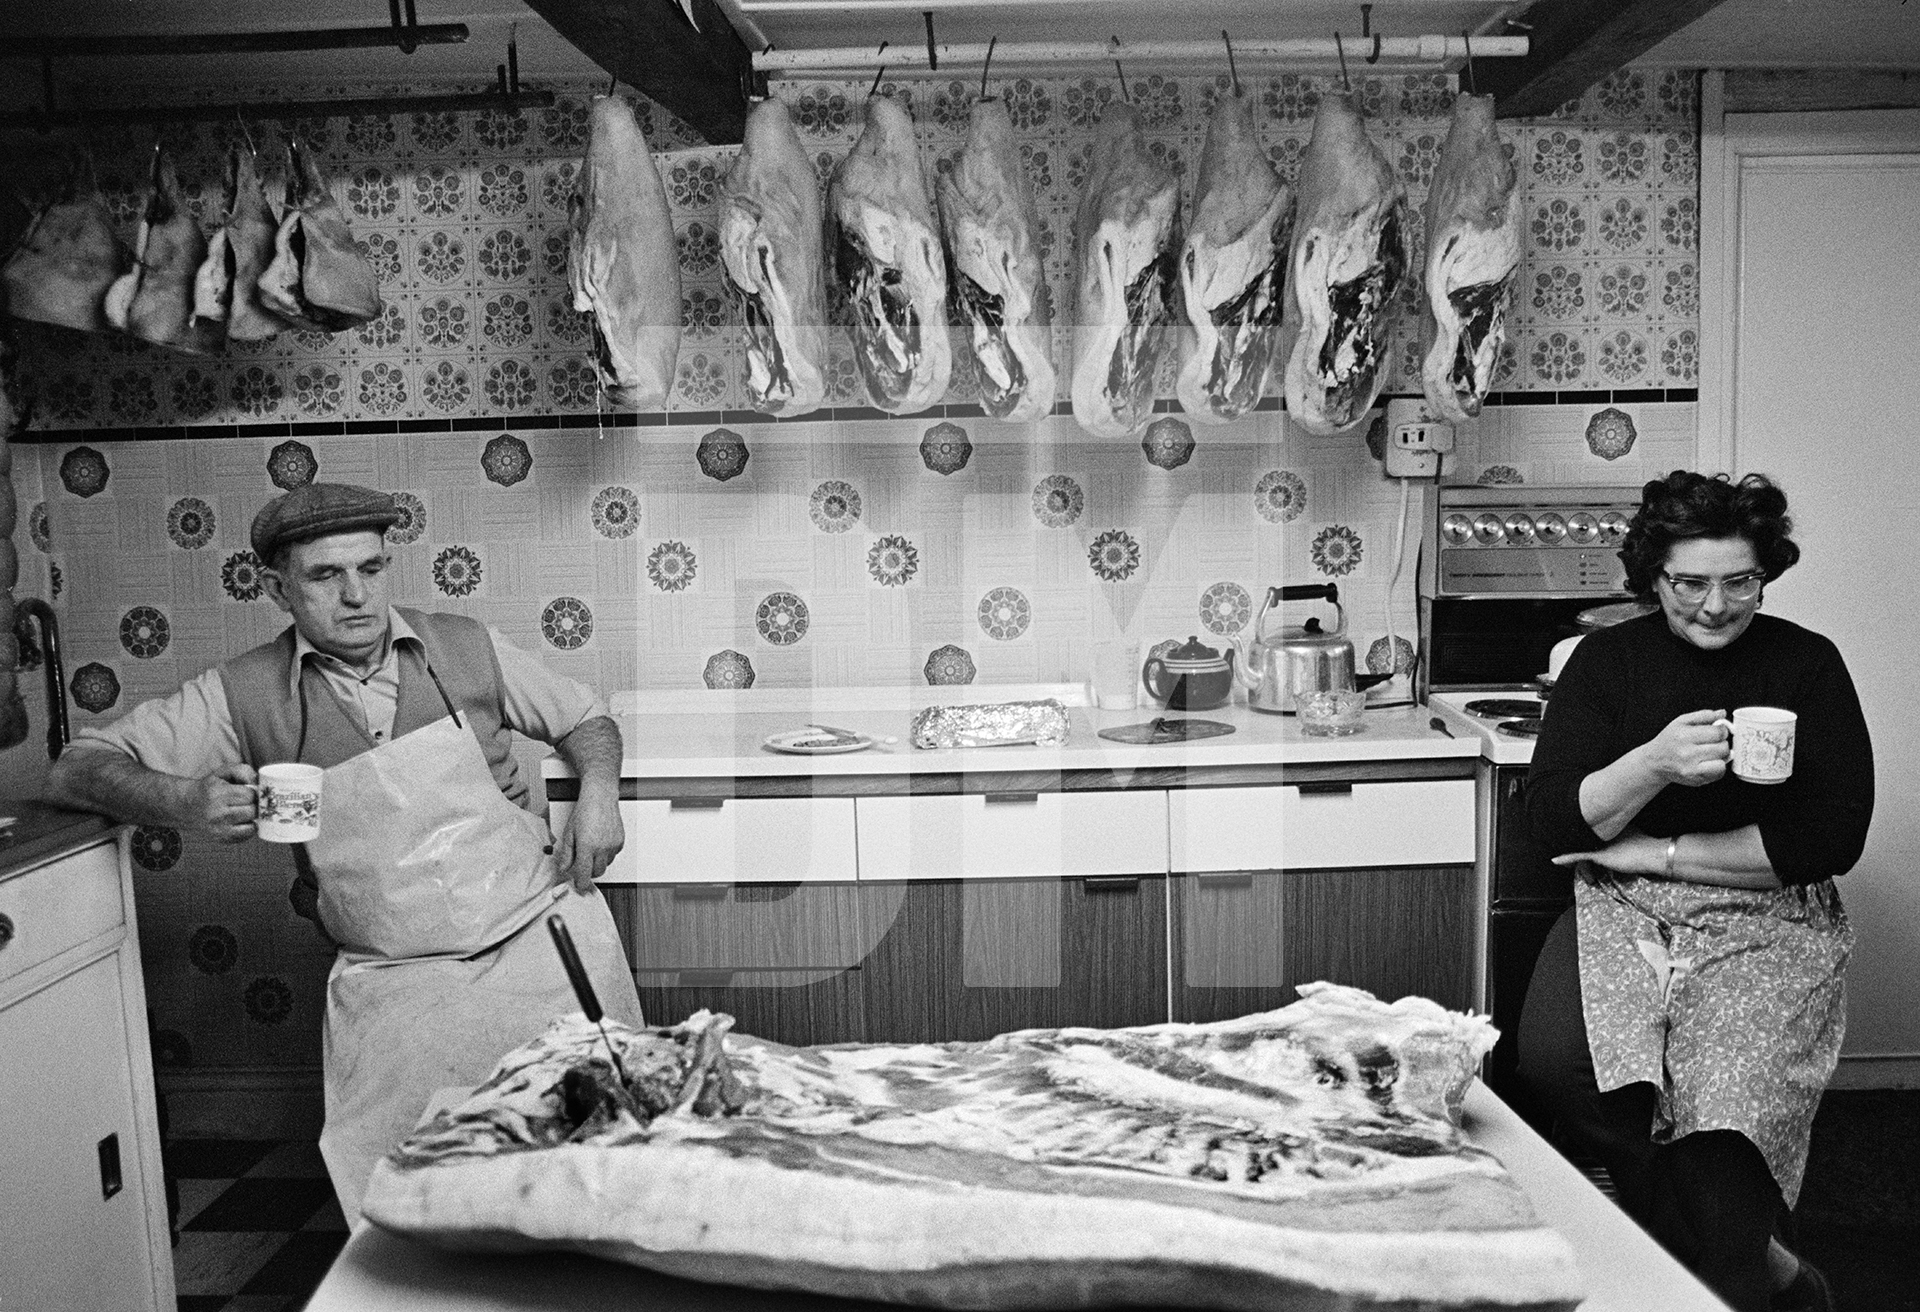 Bacon rolling. Cyril and Elsie Richardson enjoy a coffee break. North Yorkshire 1976 by Daniel Meadows